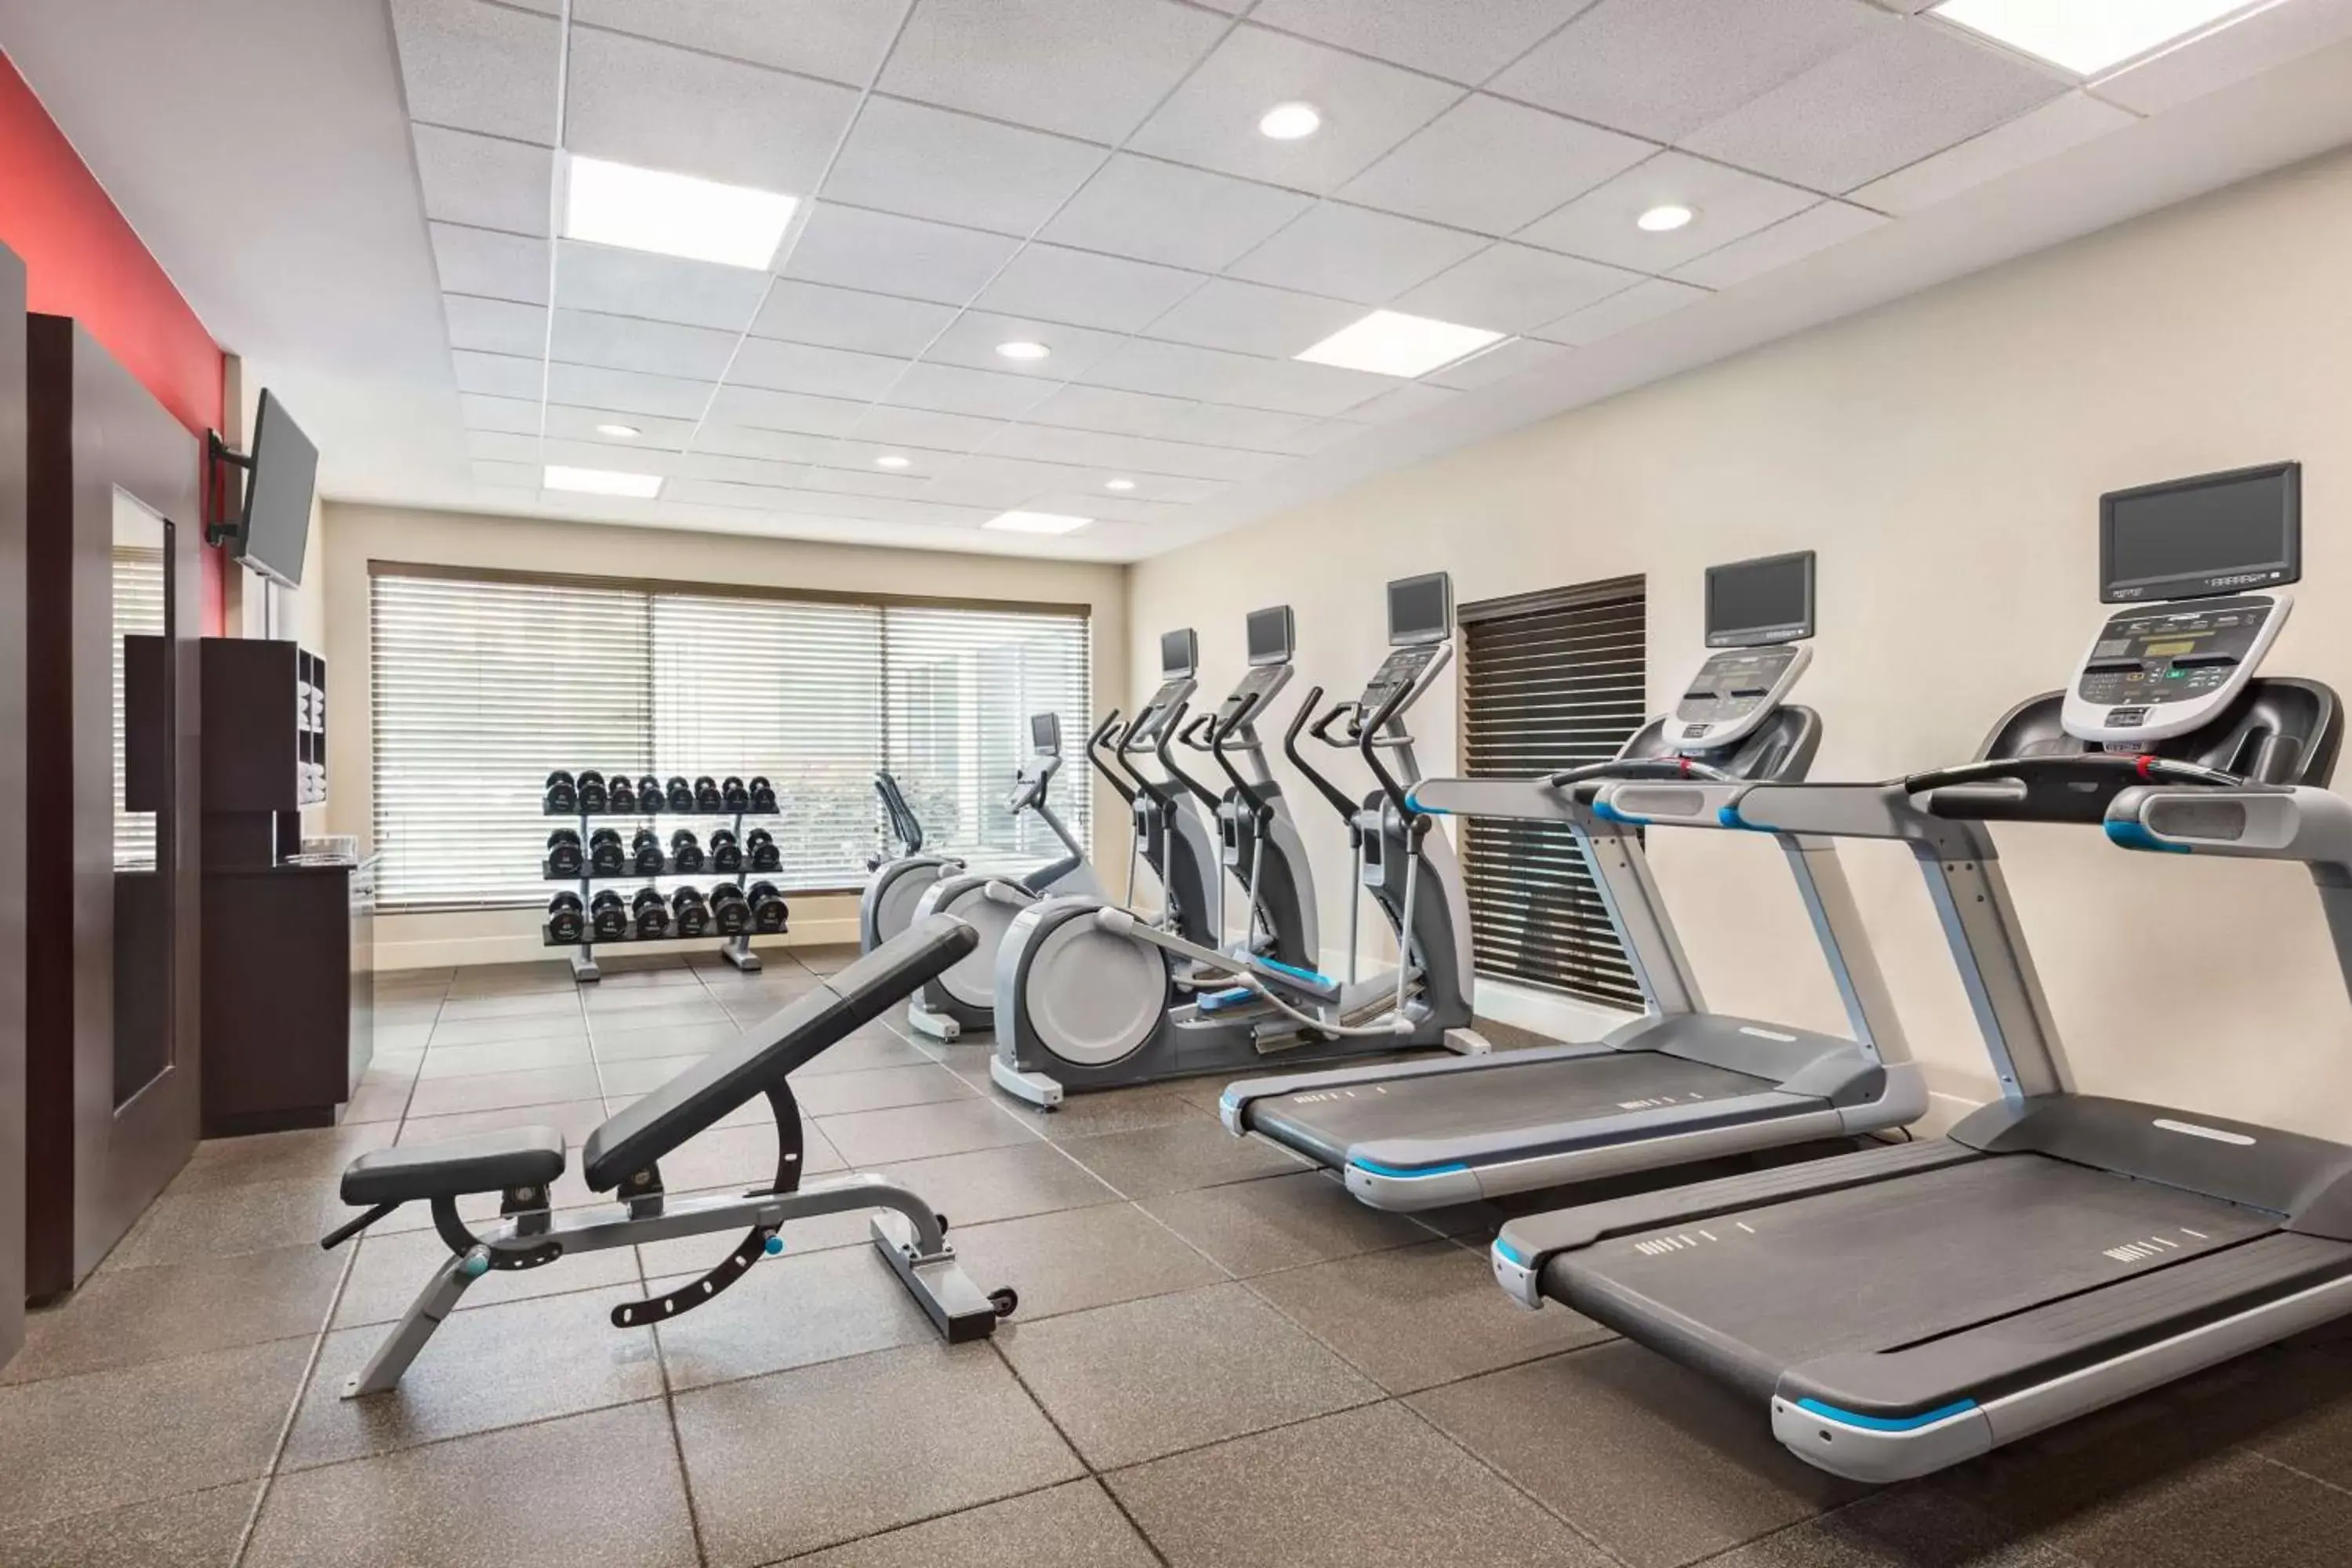 Fitness centre/facilities, Fitness Center/Facilities in Hilton Garden Inn Houston Energy Corridor